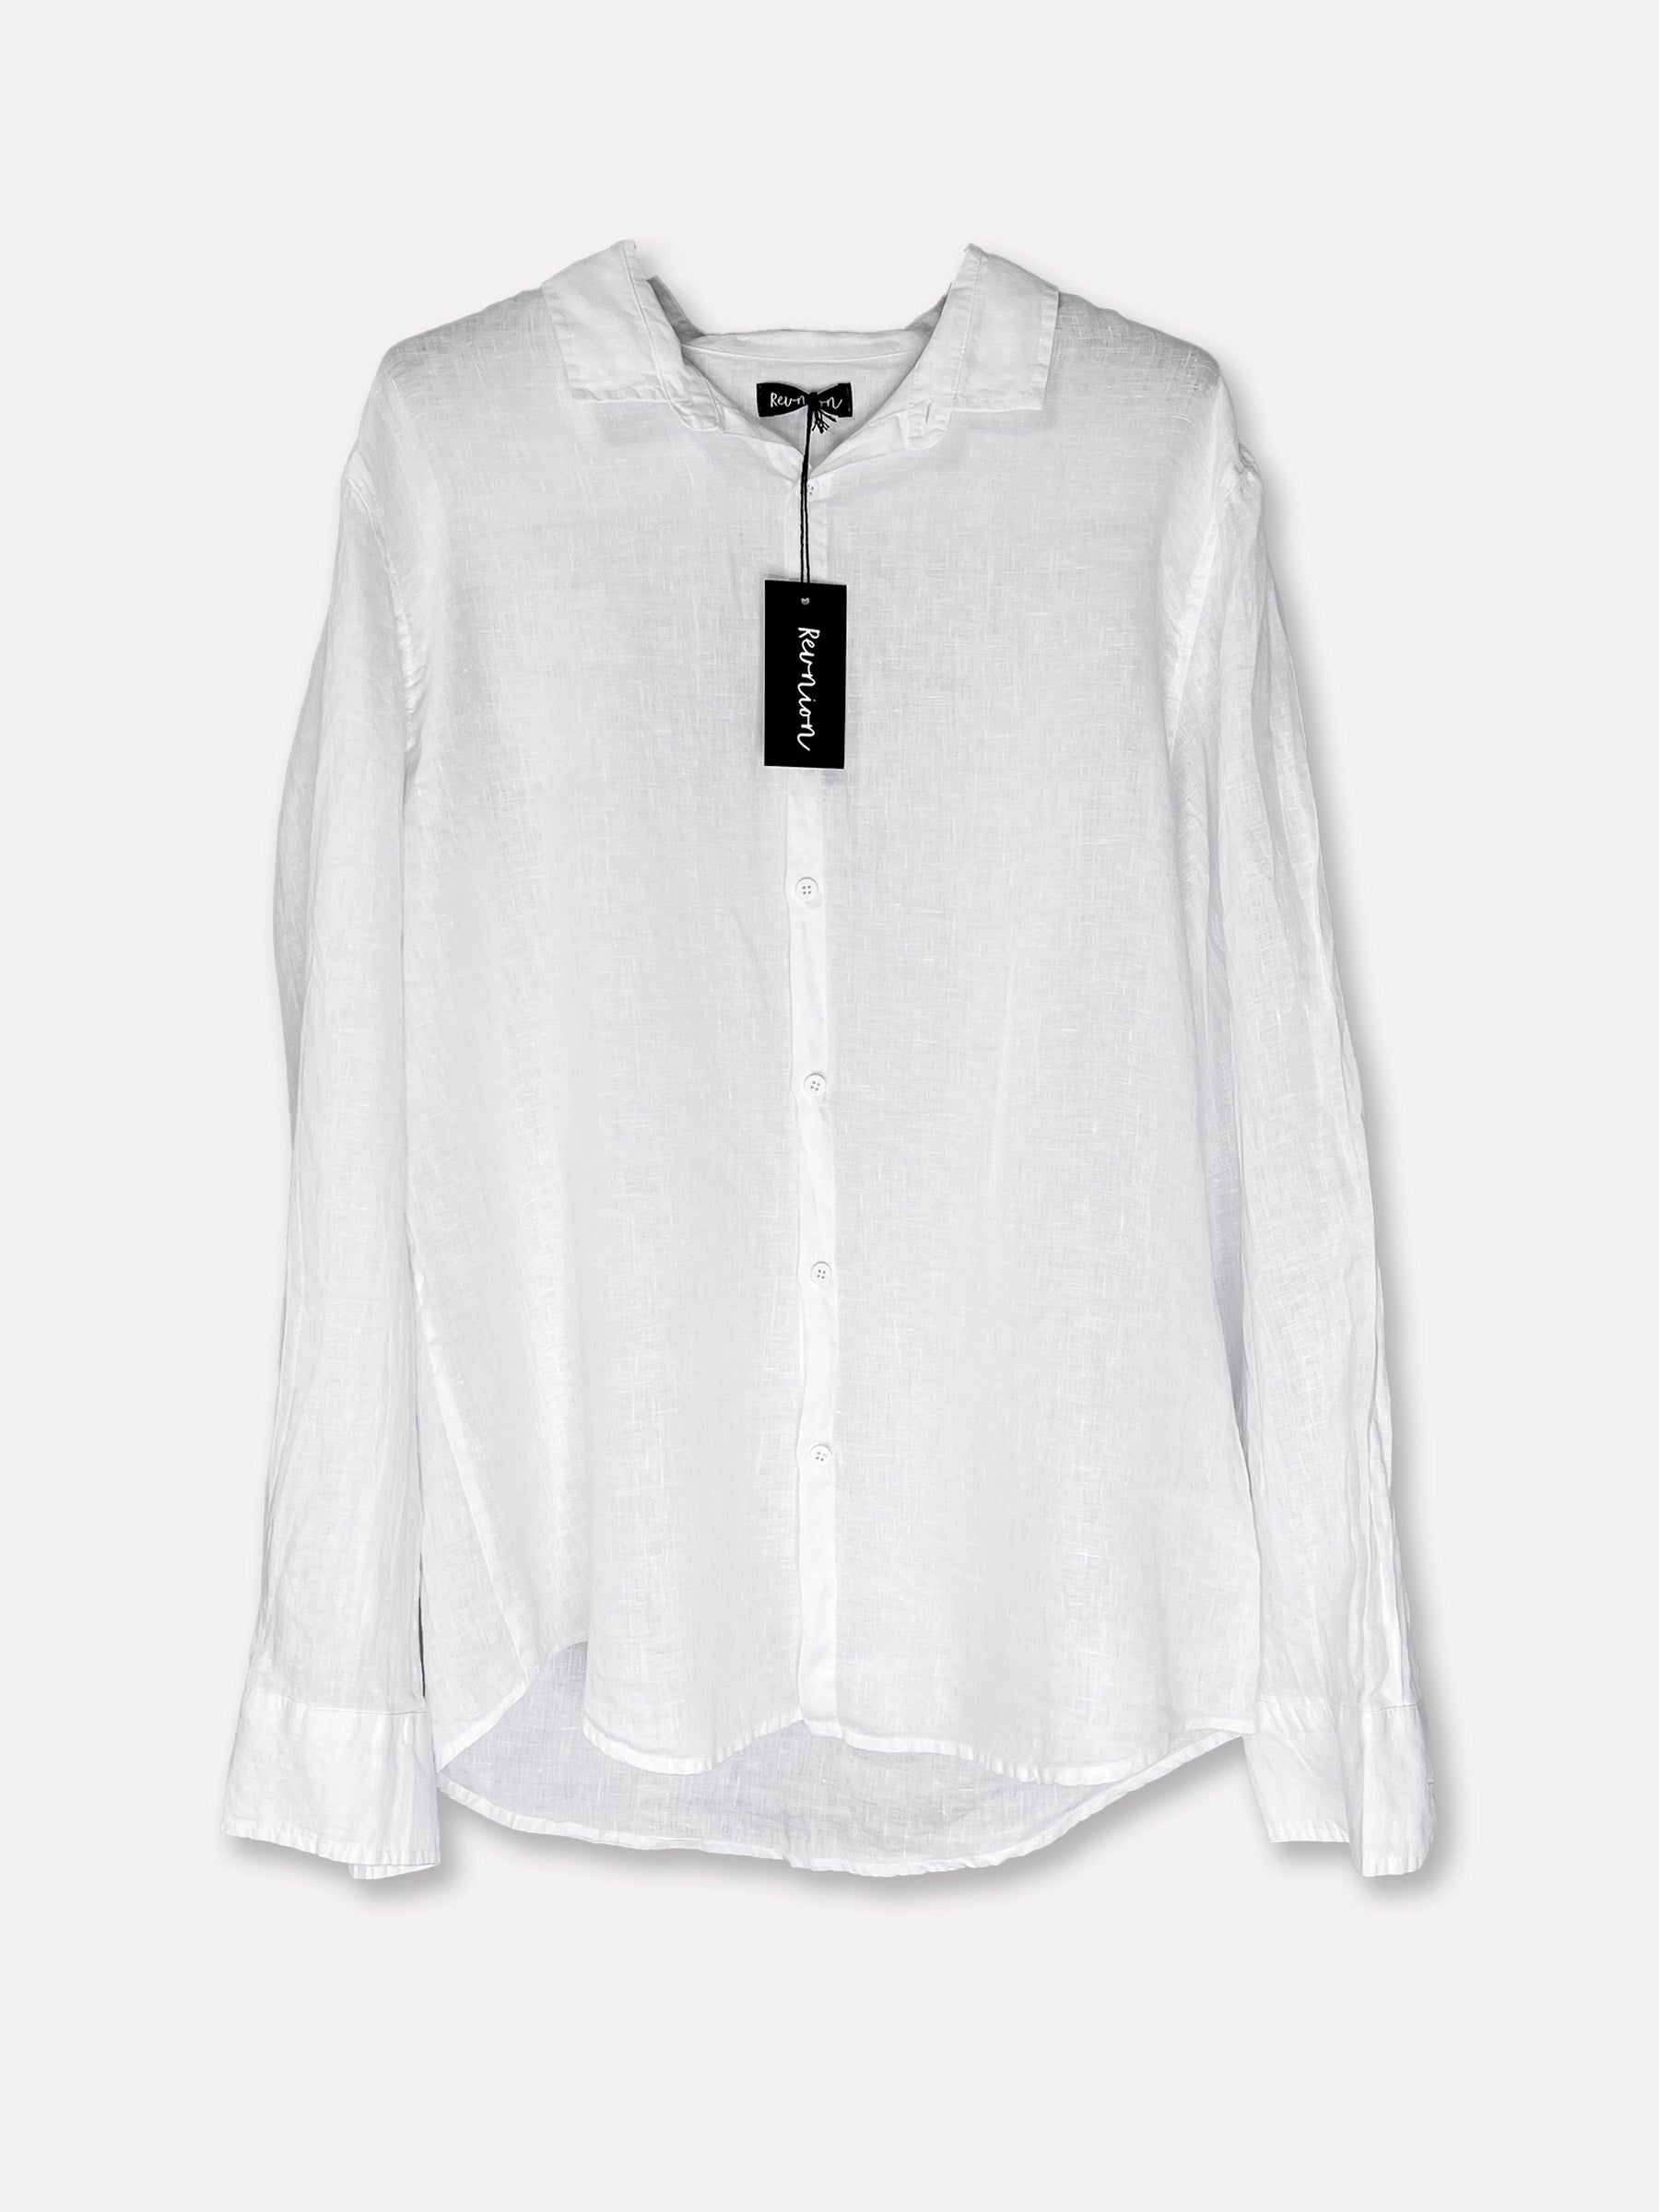 ABBE Shirt, White / 4-Pack